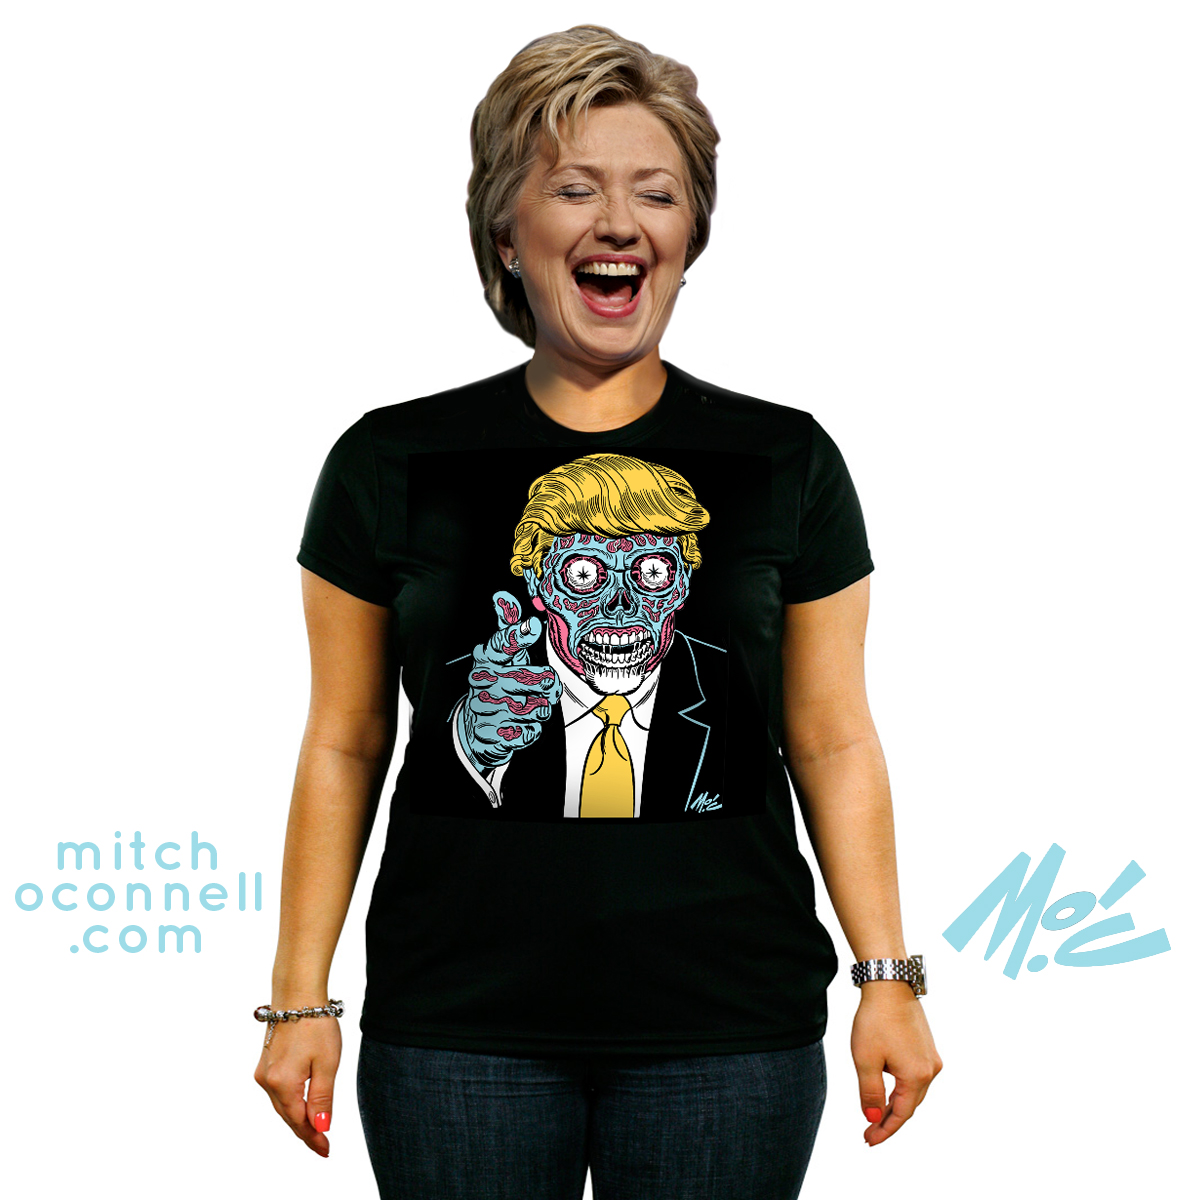 T me mash. Mitch Oconnell. I Love Trump Shirt. Blue Aliens in Shirt.